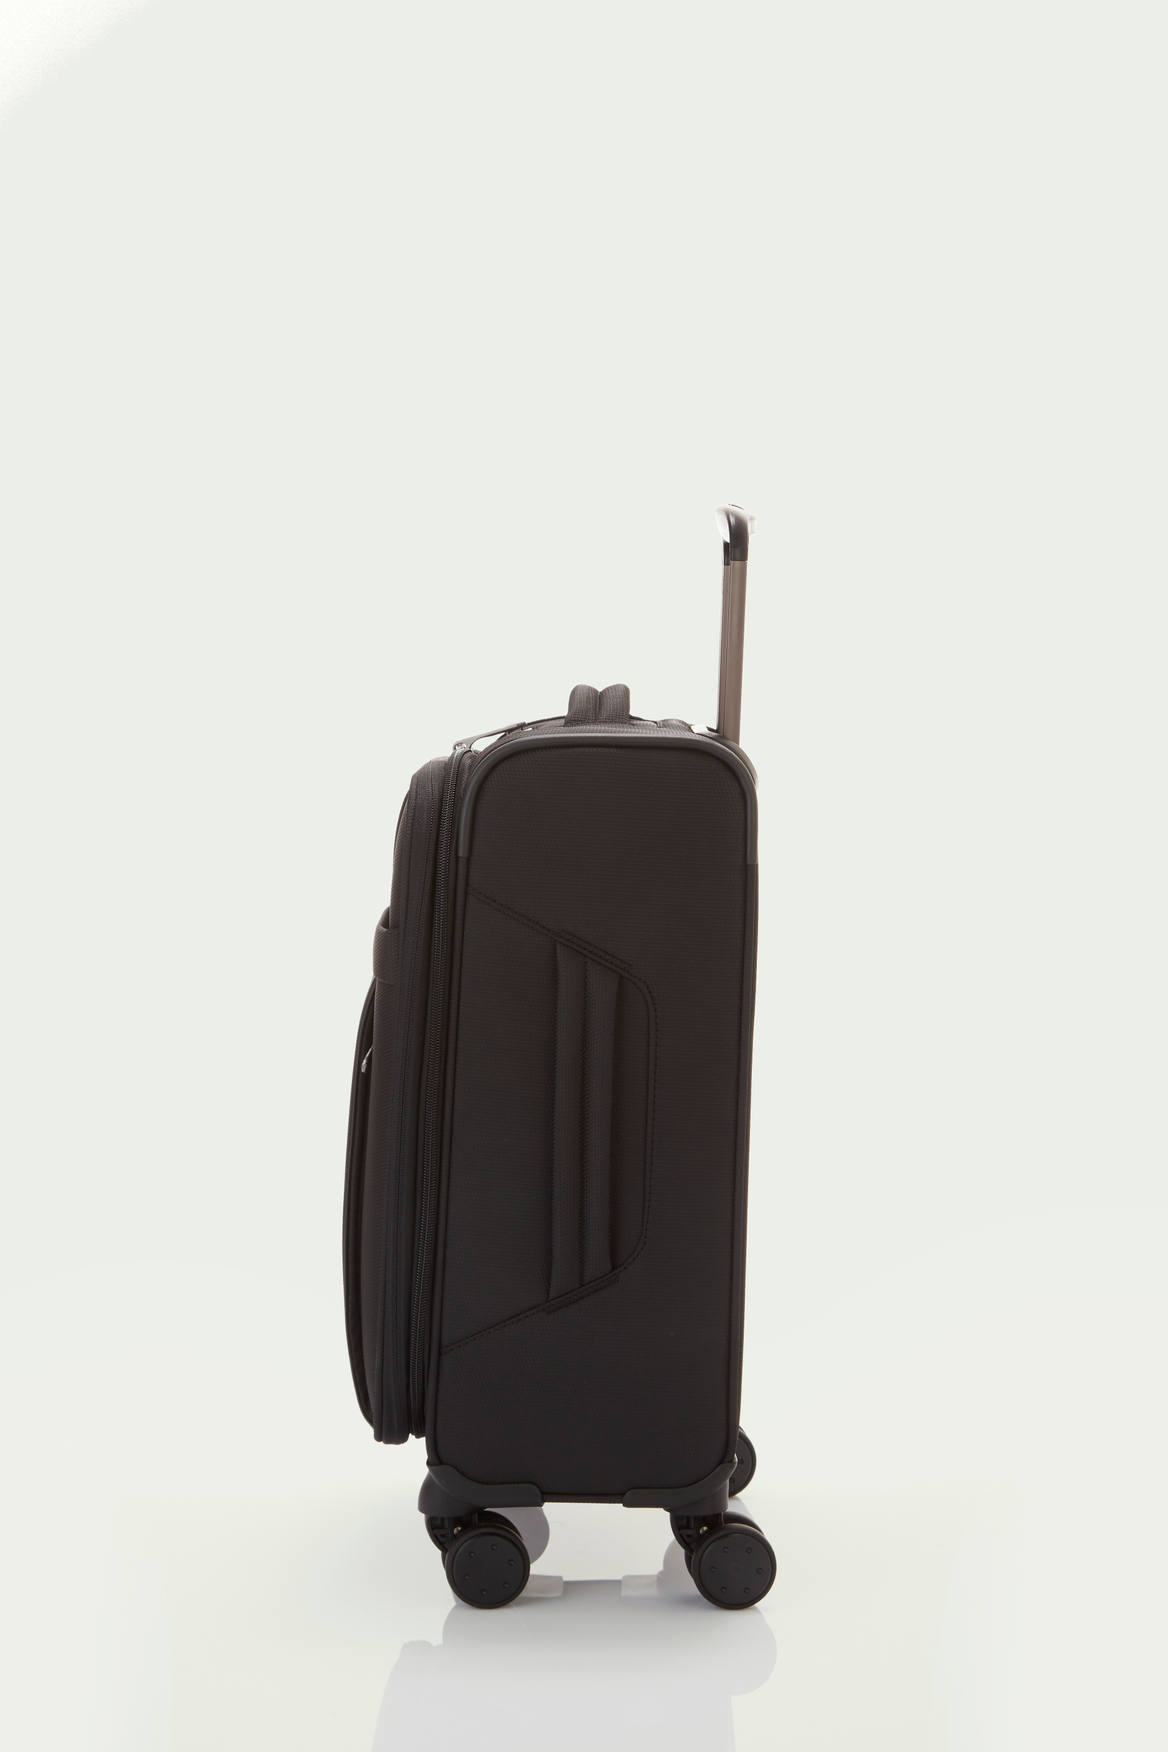 Antler Prestwick 56cm Suitcase